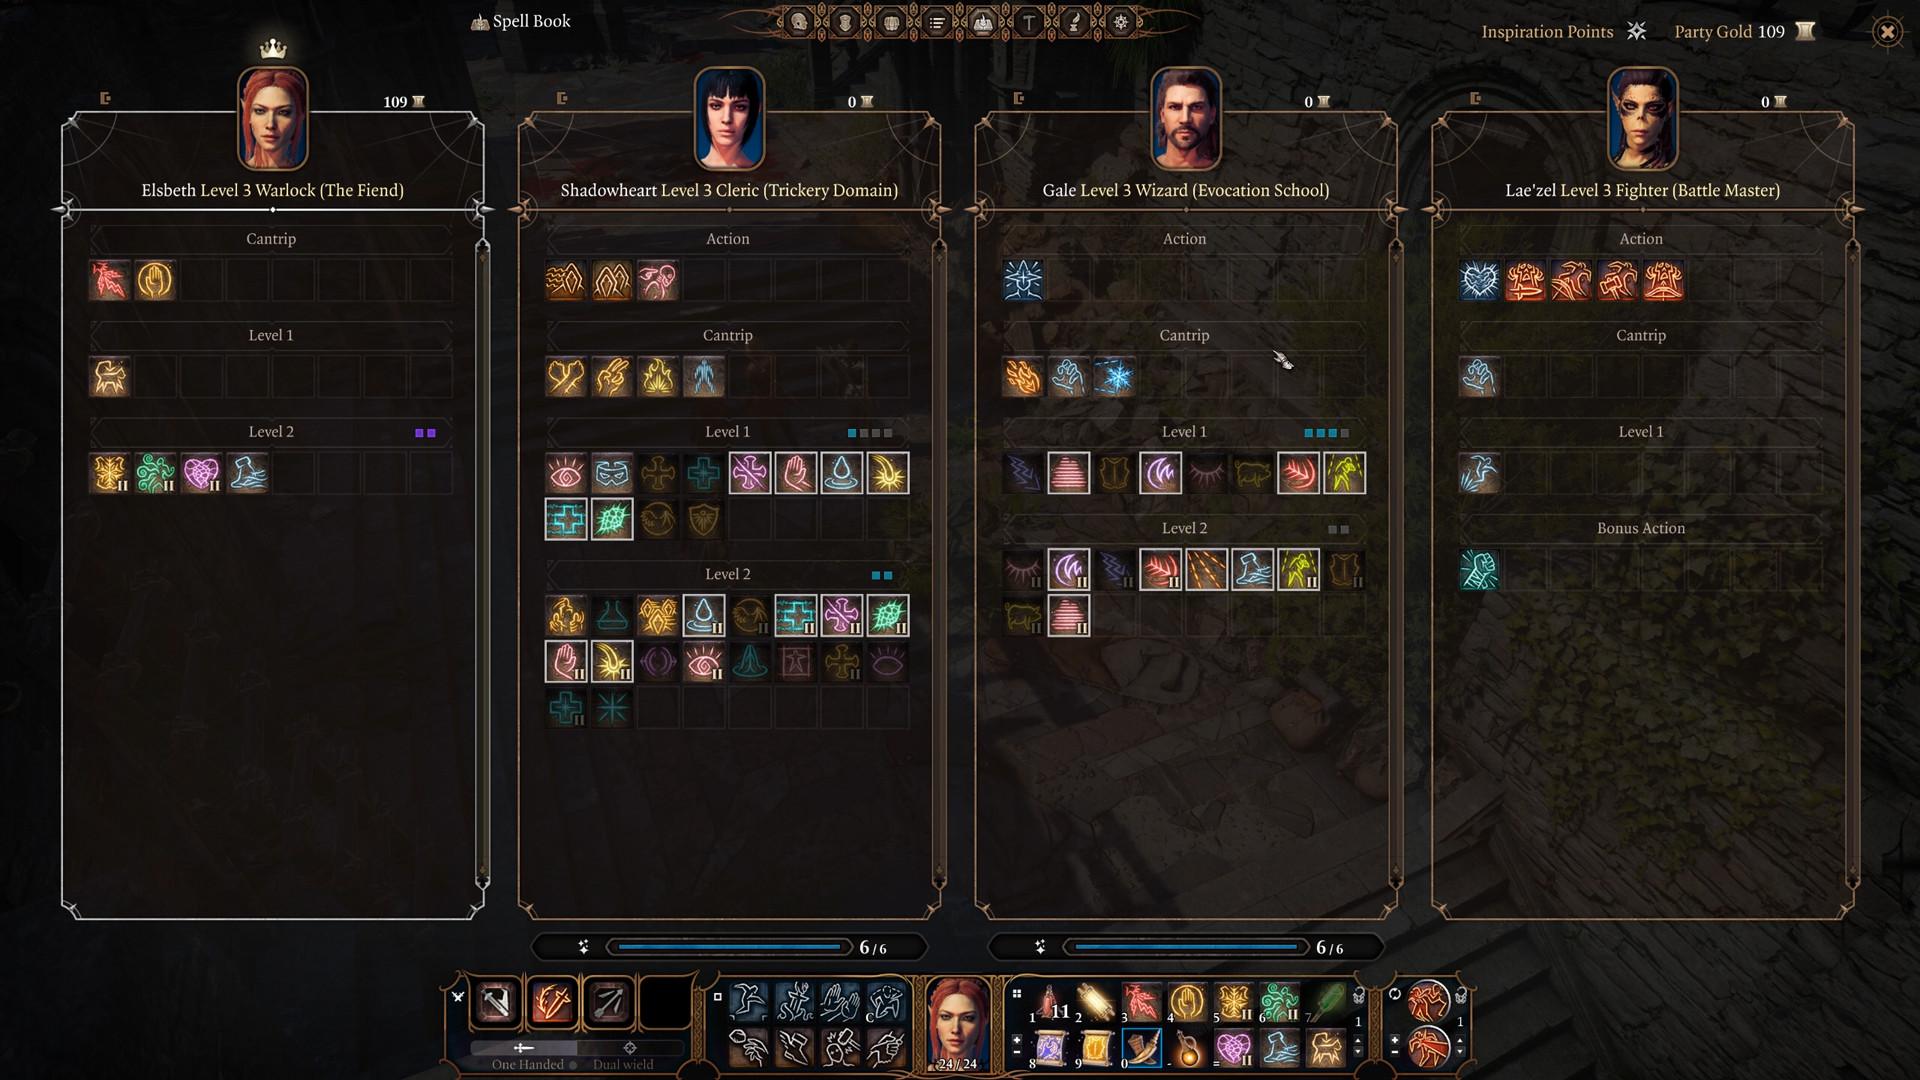 Screenshot №19 from game Baldur's Gate 3